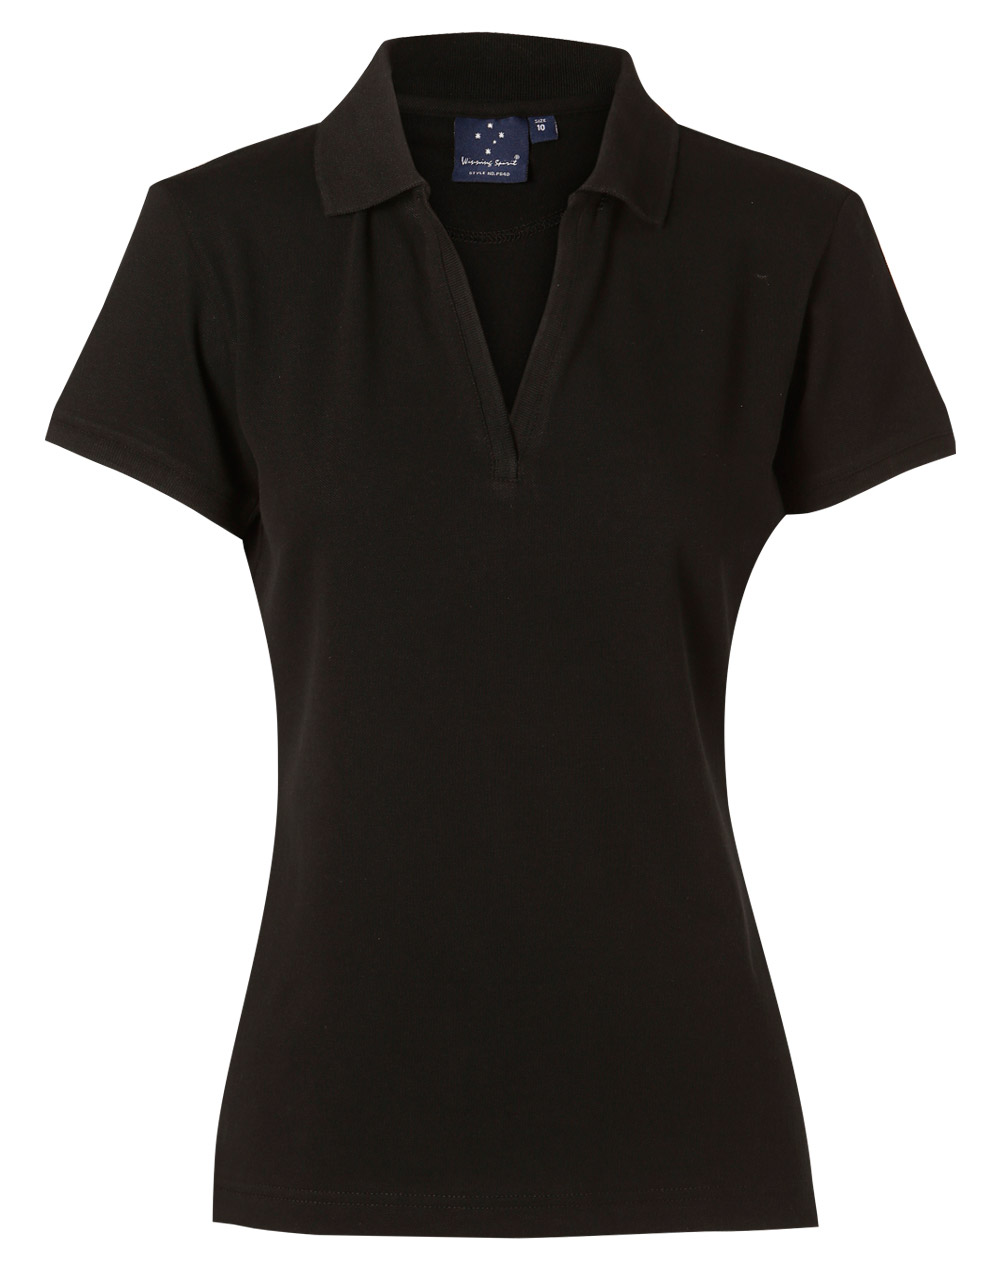 Women's Longbeach Cotton Short Sleeve Polo - Black - Uniform Edit